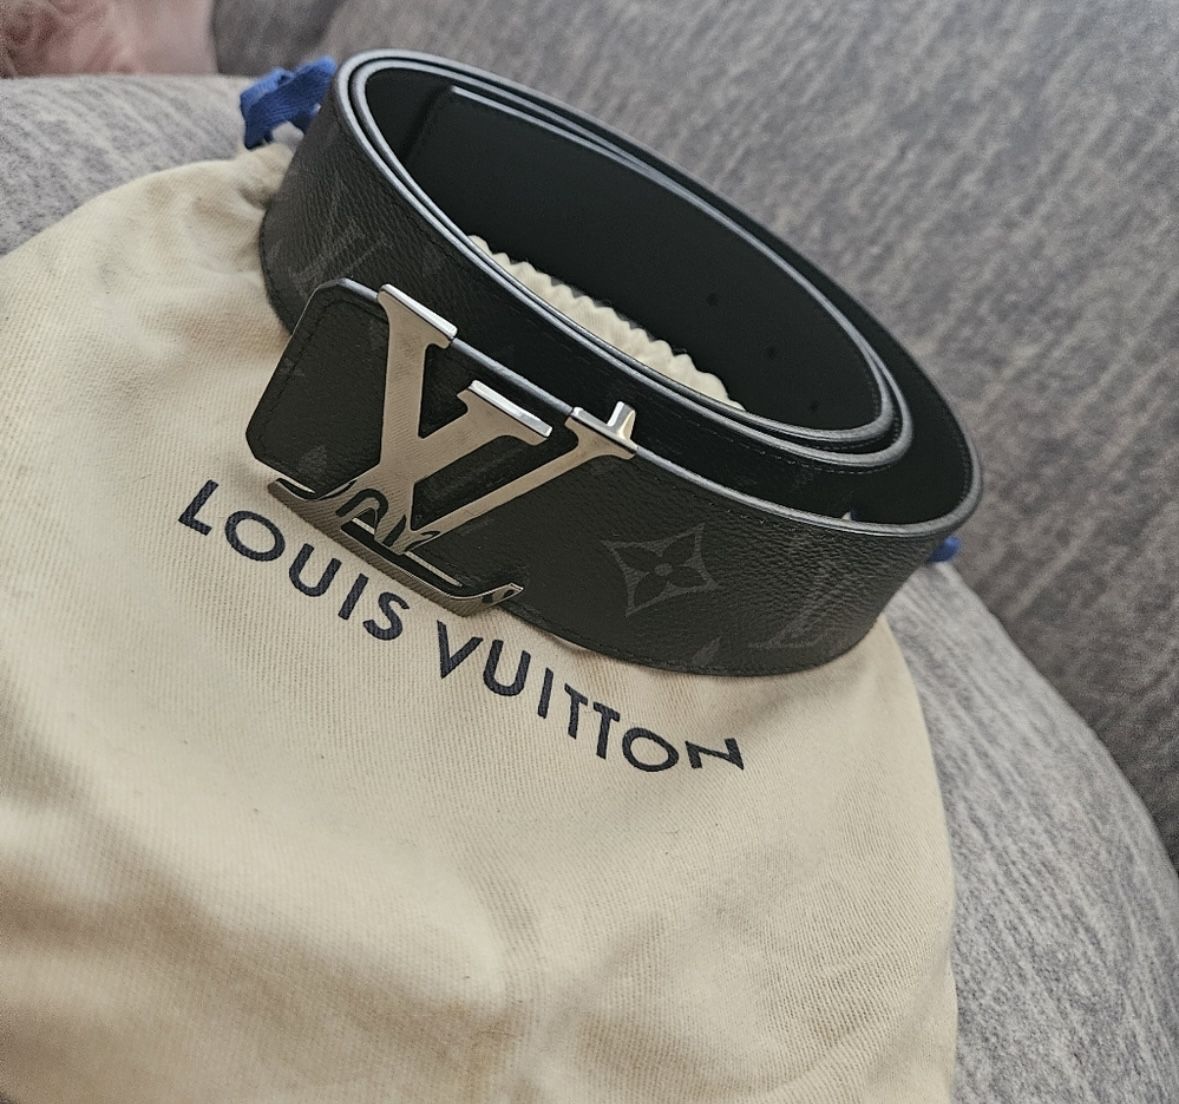 Loui Vuitton Men’s Belt 